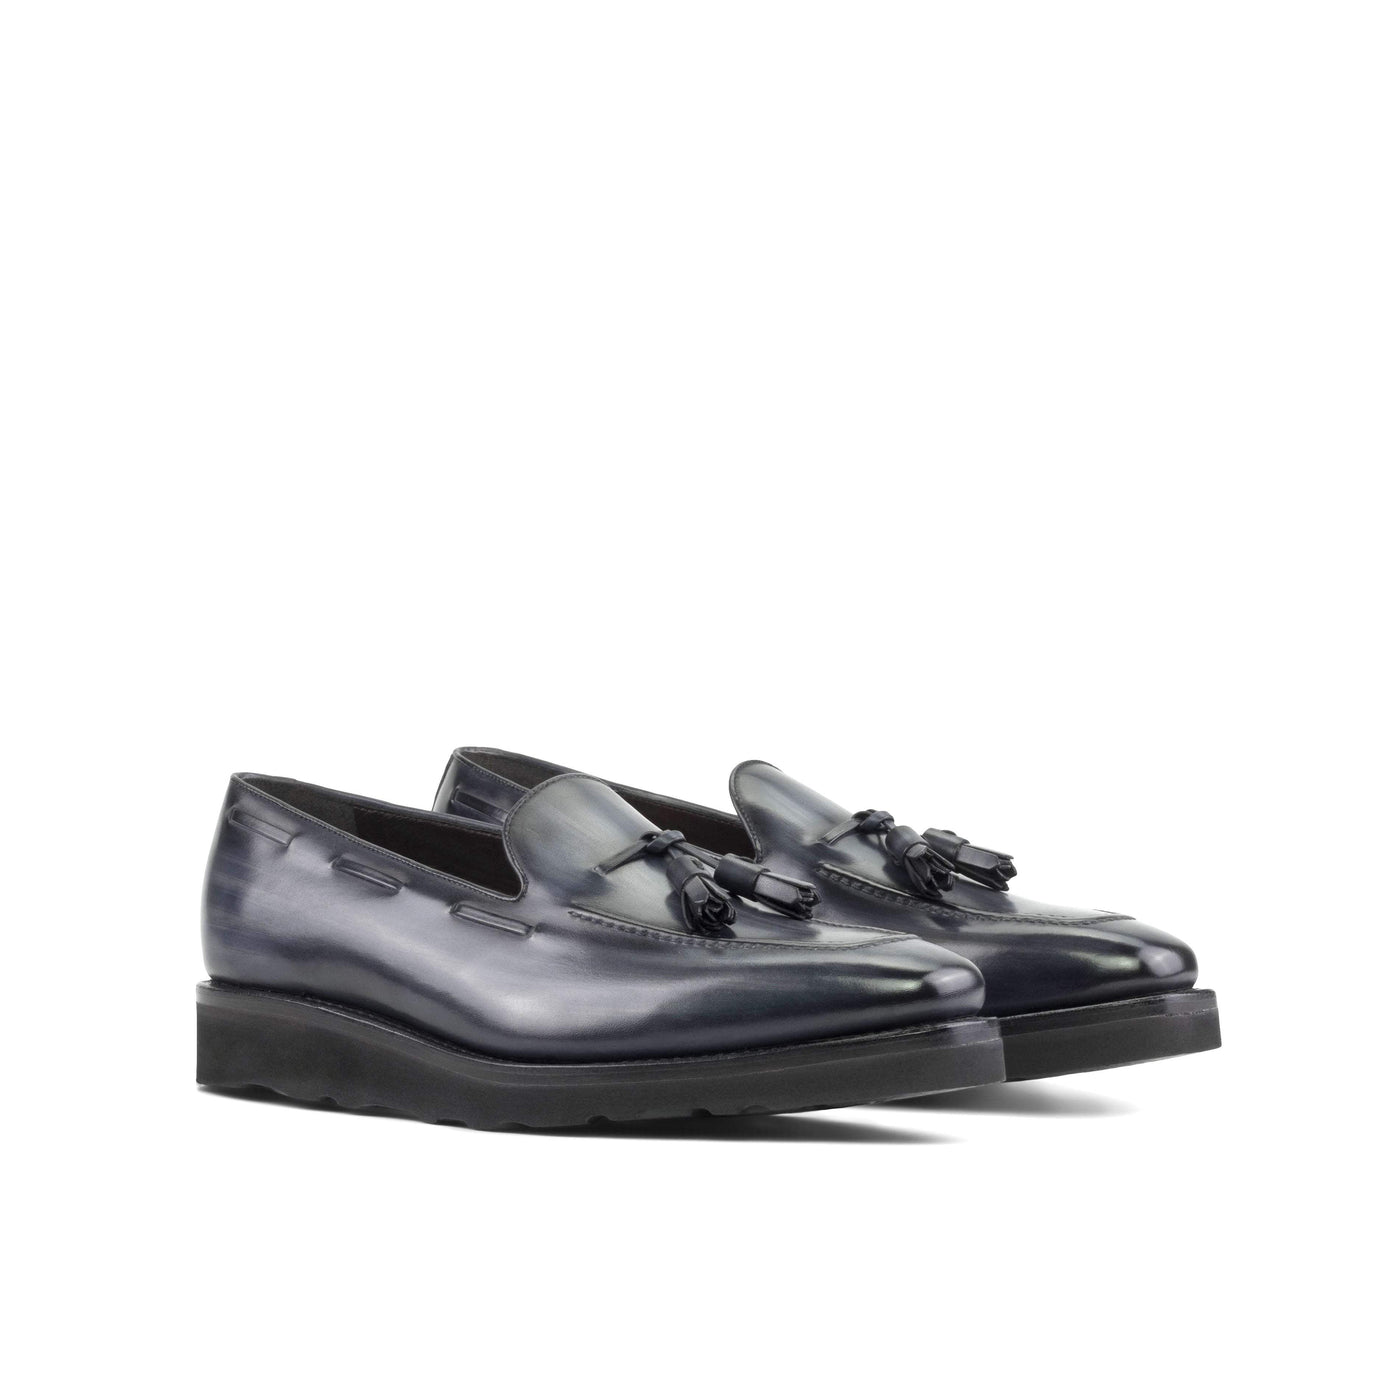 Men's Loafer Shoes Patina Goodyear Welt Grey 5410 6- MERRIMIUM